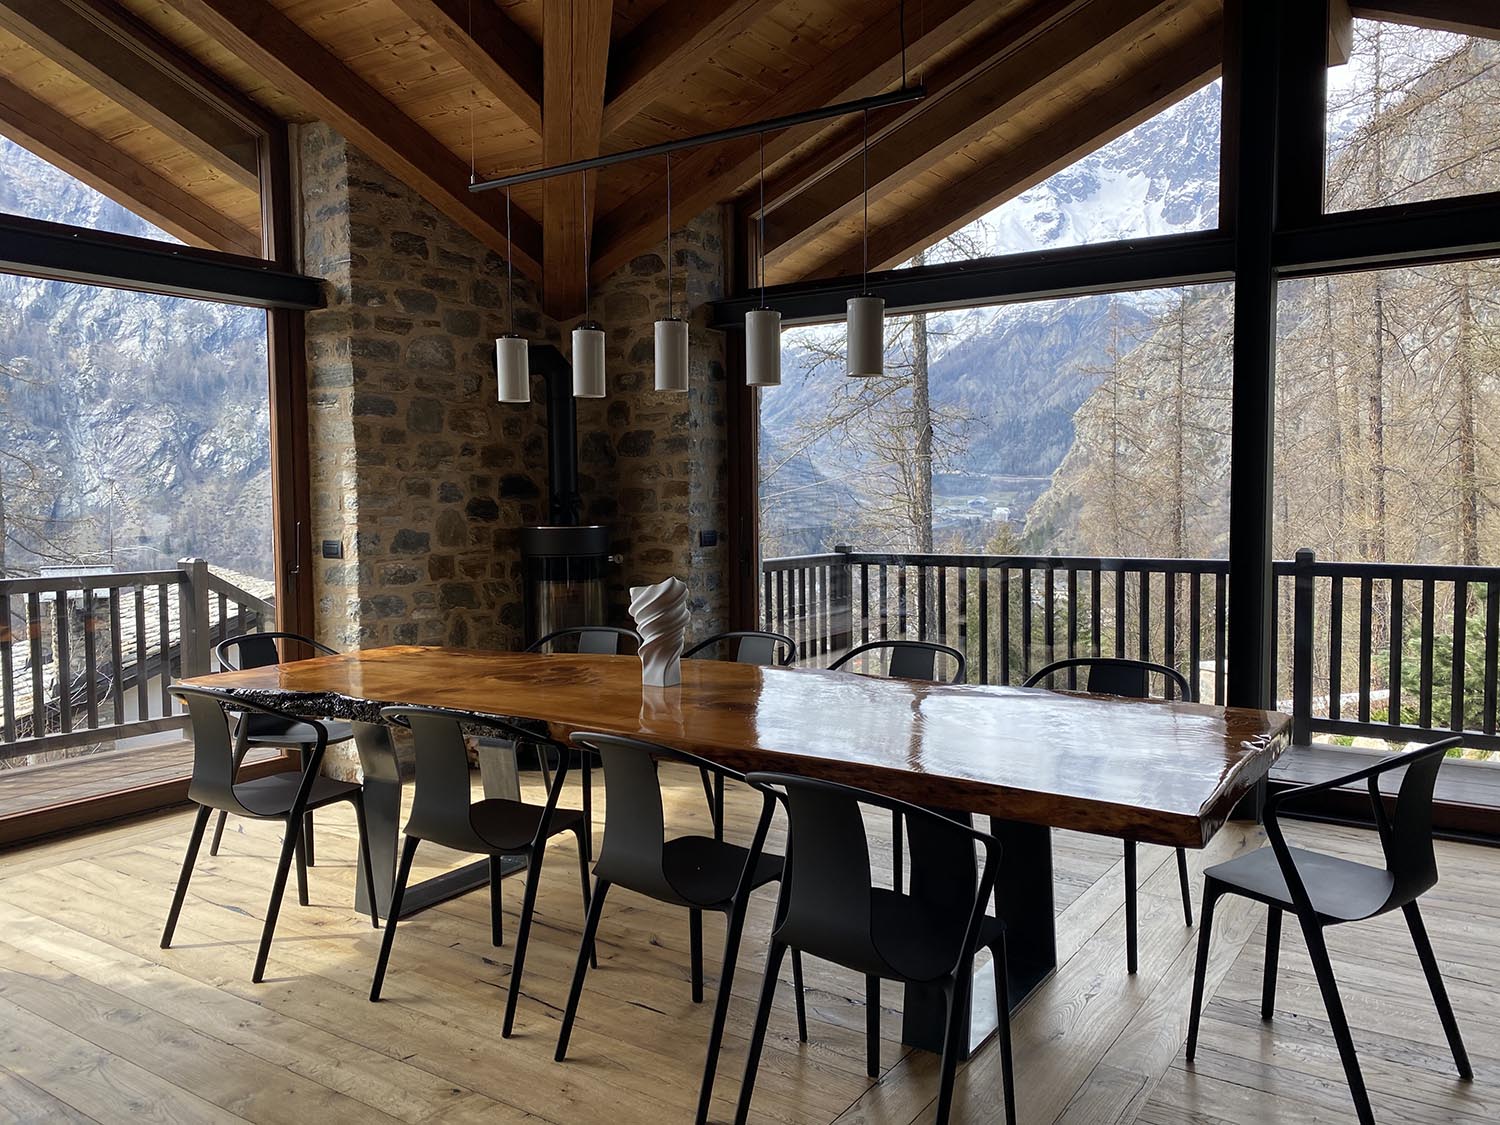 Charme Maison Immobiliare Courmayeur, Monte Bianco, Valle d'Aosta